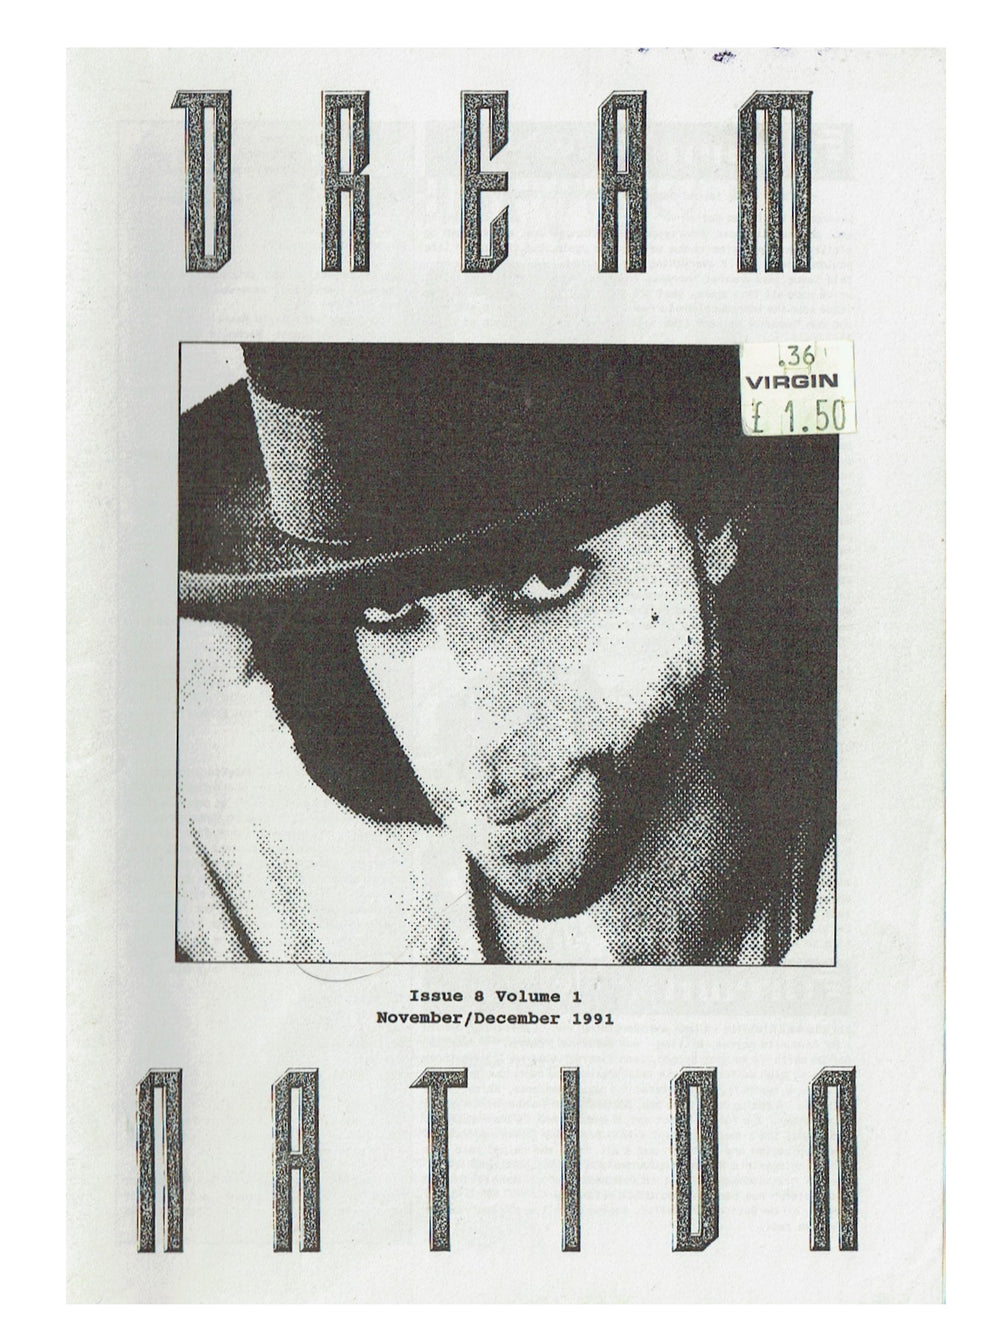 Prince – Dream Nation UK Fanzine Issue 8 Volume 1 November / December 1991 Prince